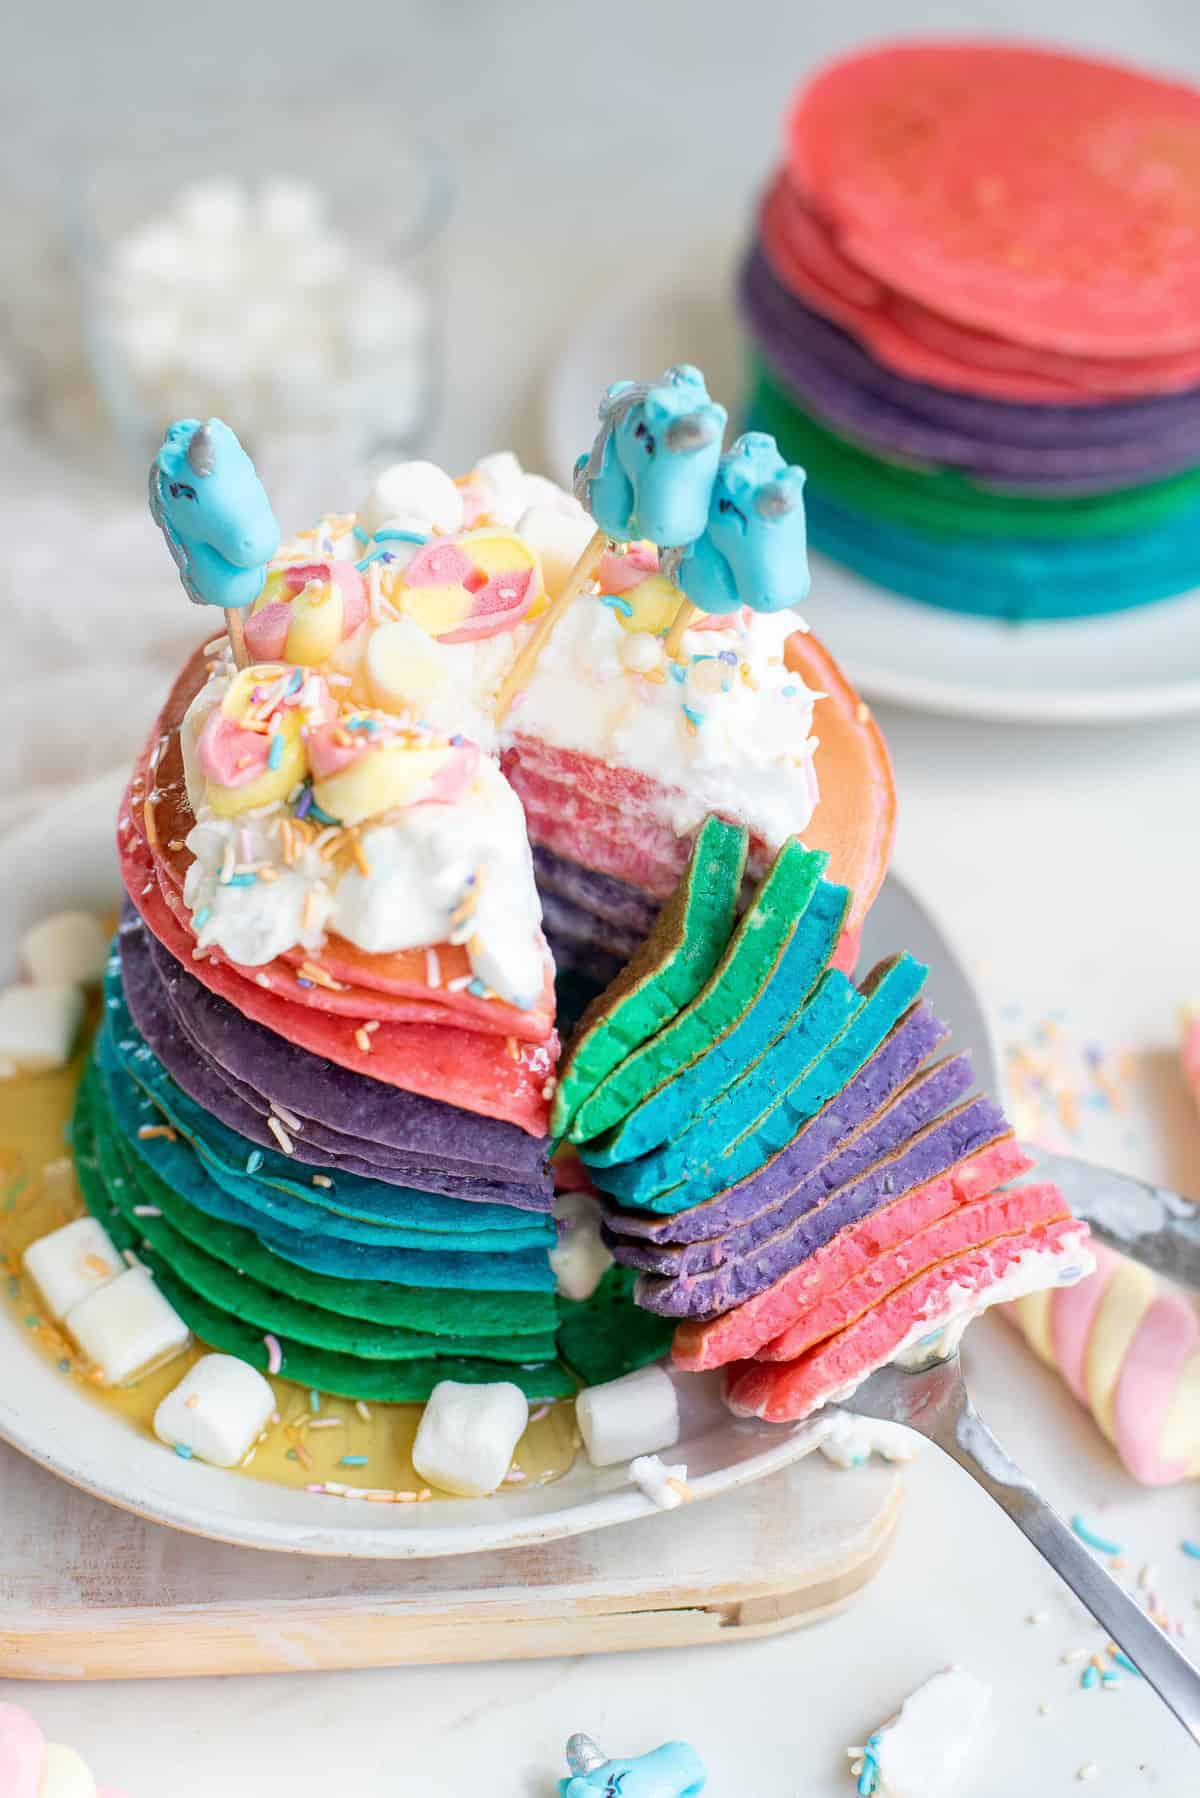 Large stack of colorful unicorn pancakes.